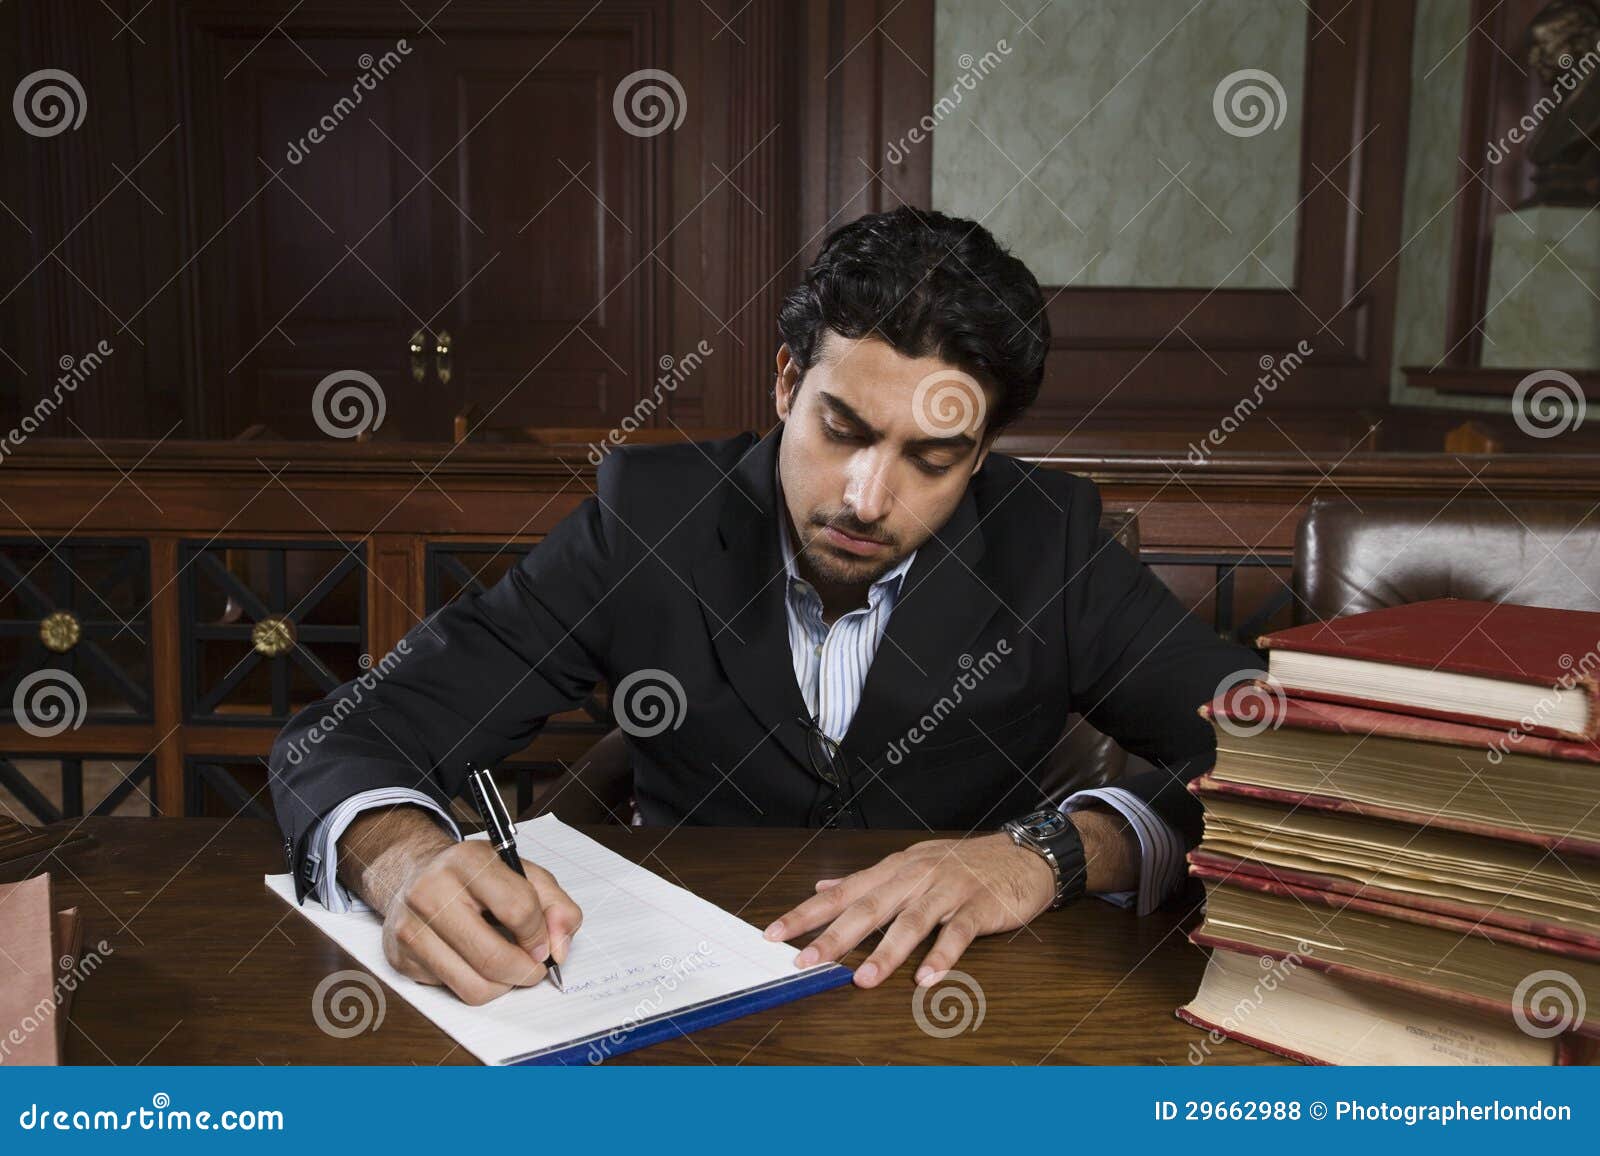 male advocate preparing notes